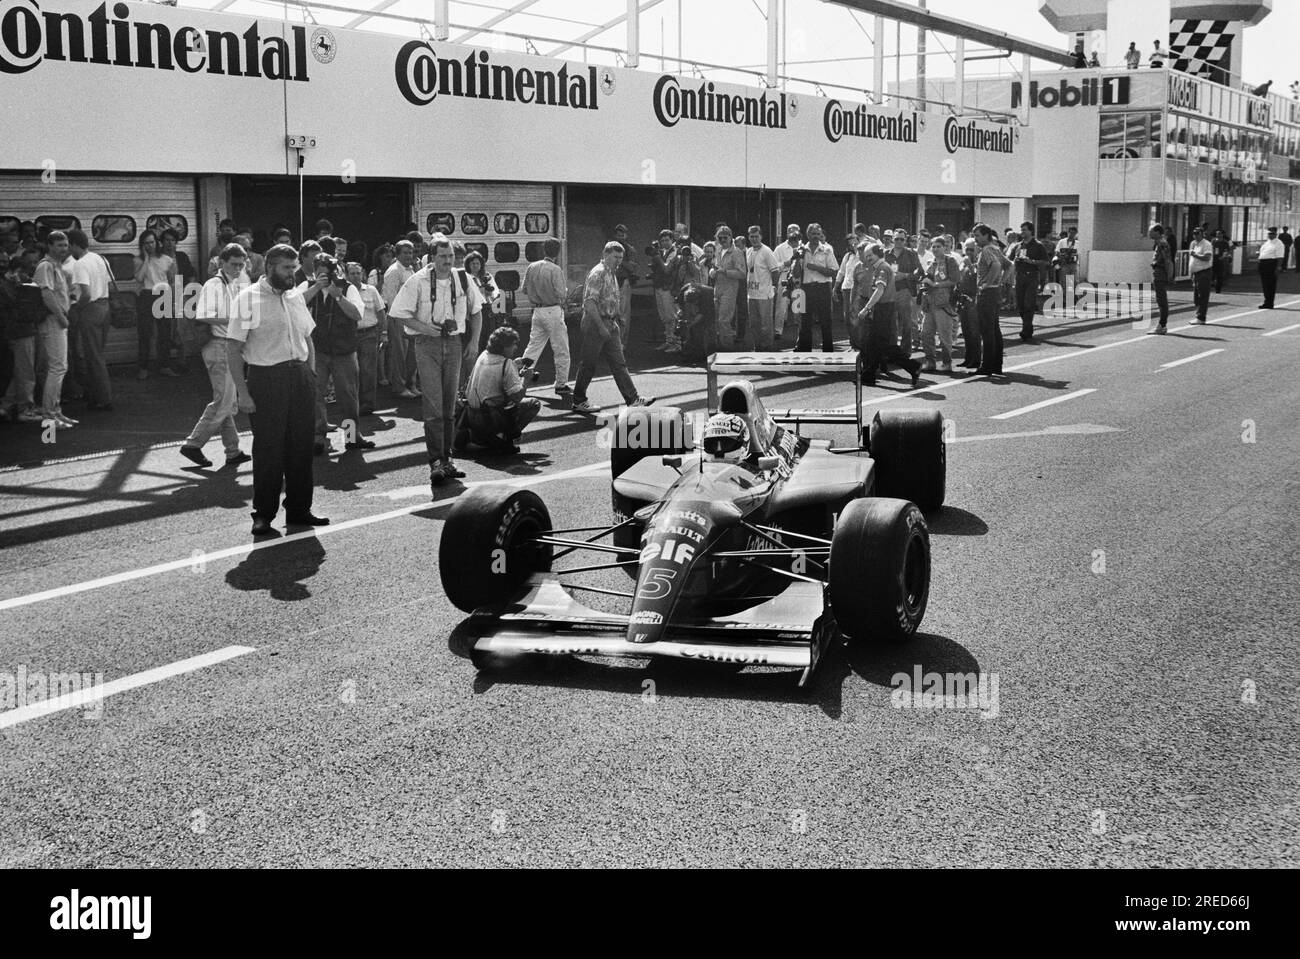 Germania, Hockenheim, 15/07/1992 Archivio: 35-38-22 test drive di Formula 1 presso l'Hockenheimring foto: Nigel Mansell, Williams Renault [traduzione automatica] Foto Stock